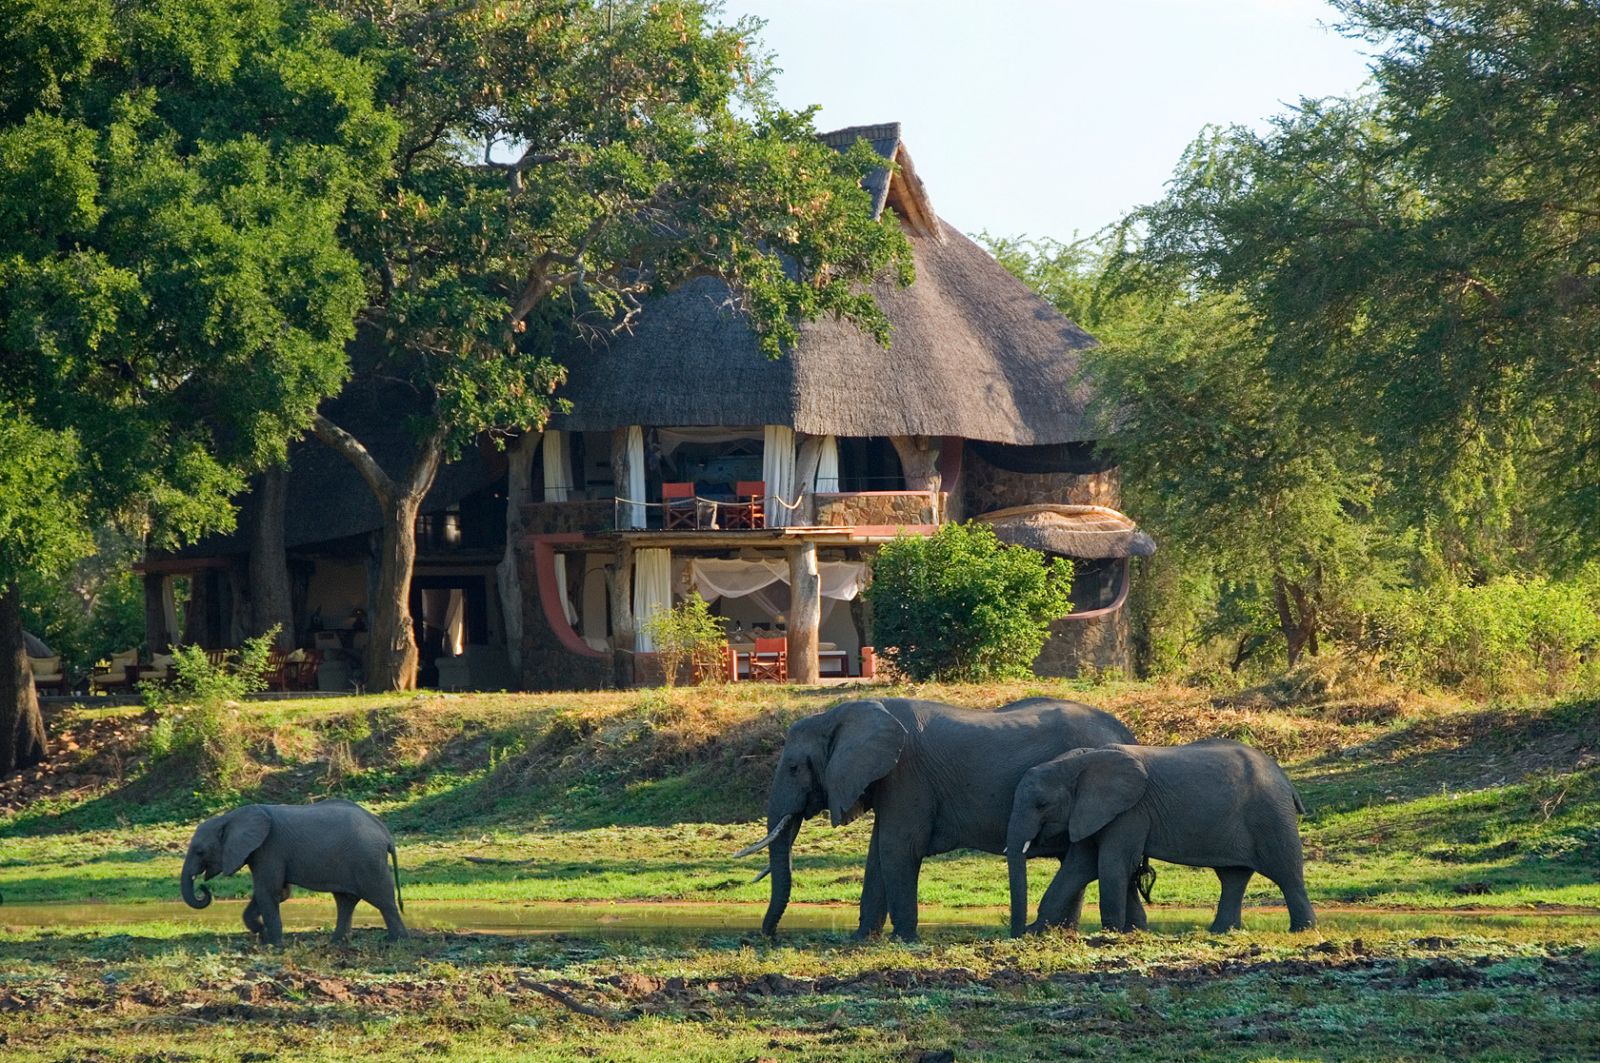 Elephants grazing close to the Luangwa Safari House in Zambia